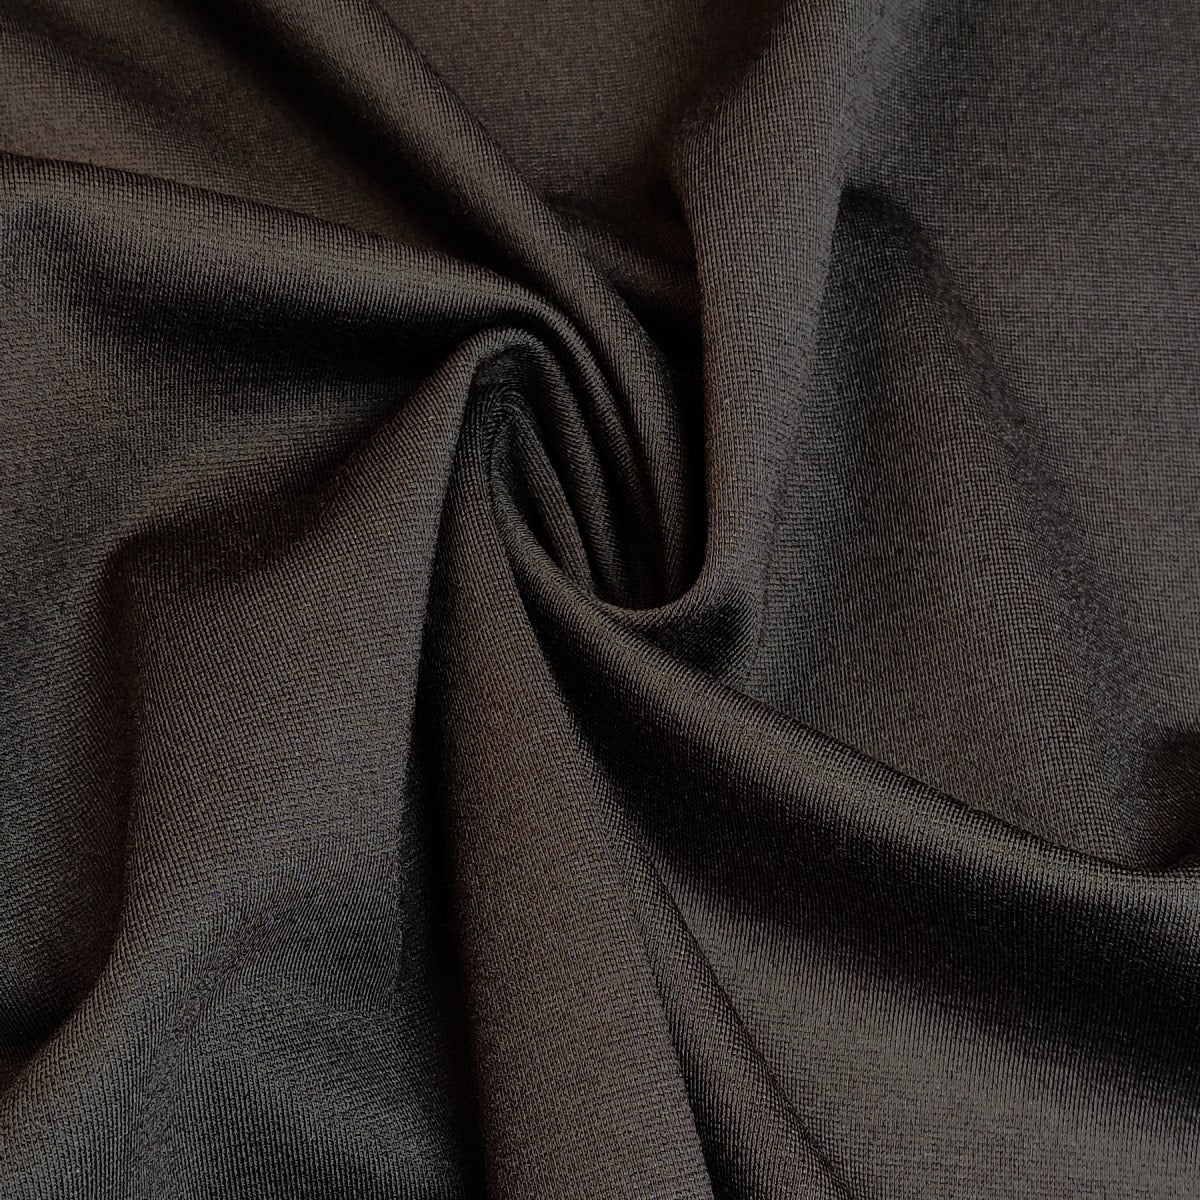 Designer Deadstock – Rayon/Nylon Ponte Knit – Tan